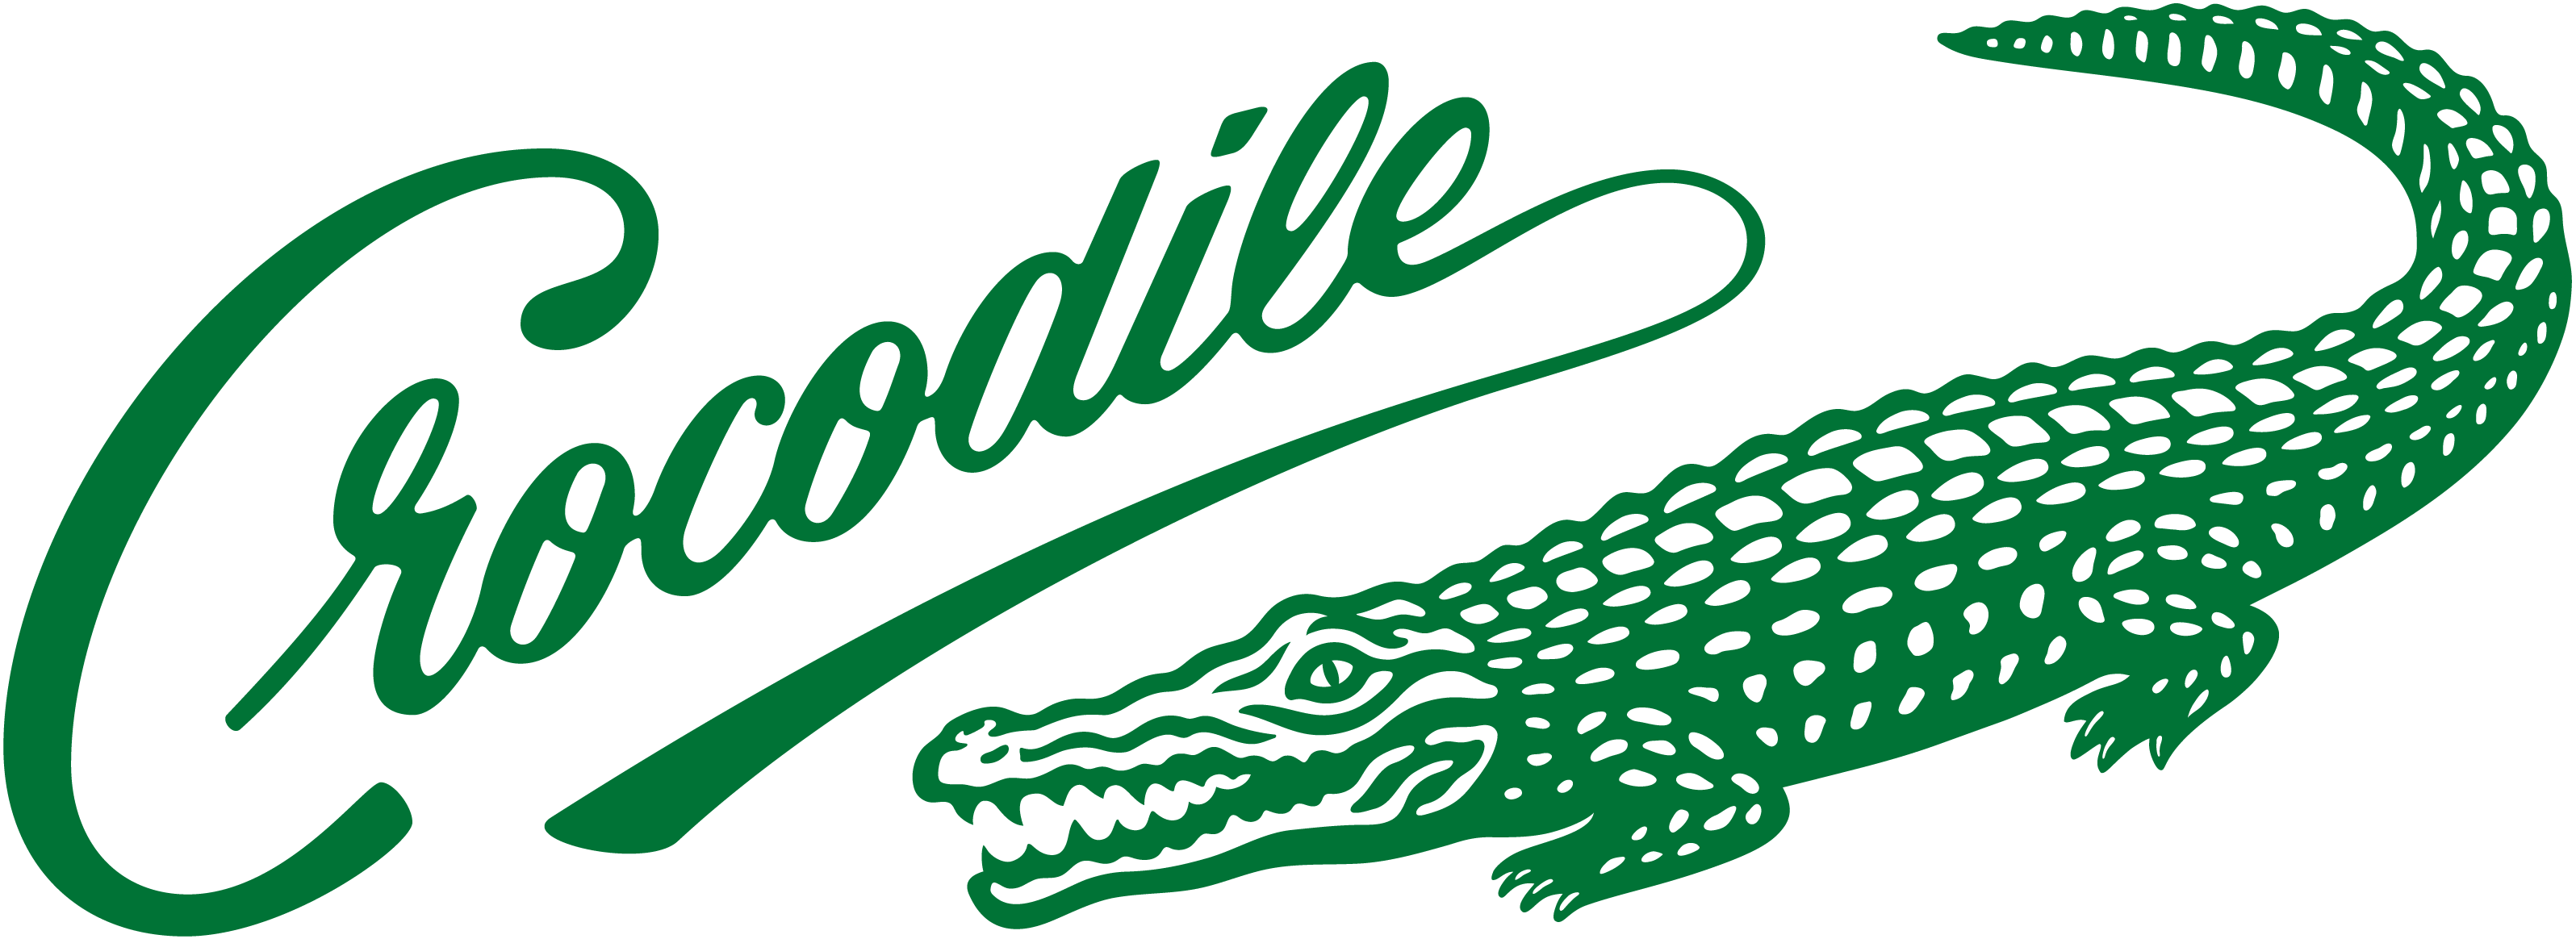 Crocodile Bangladesh Ltd.